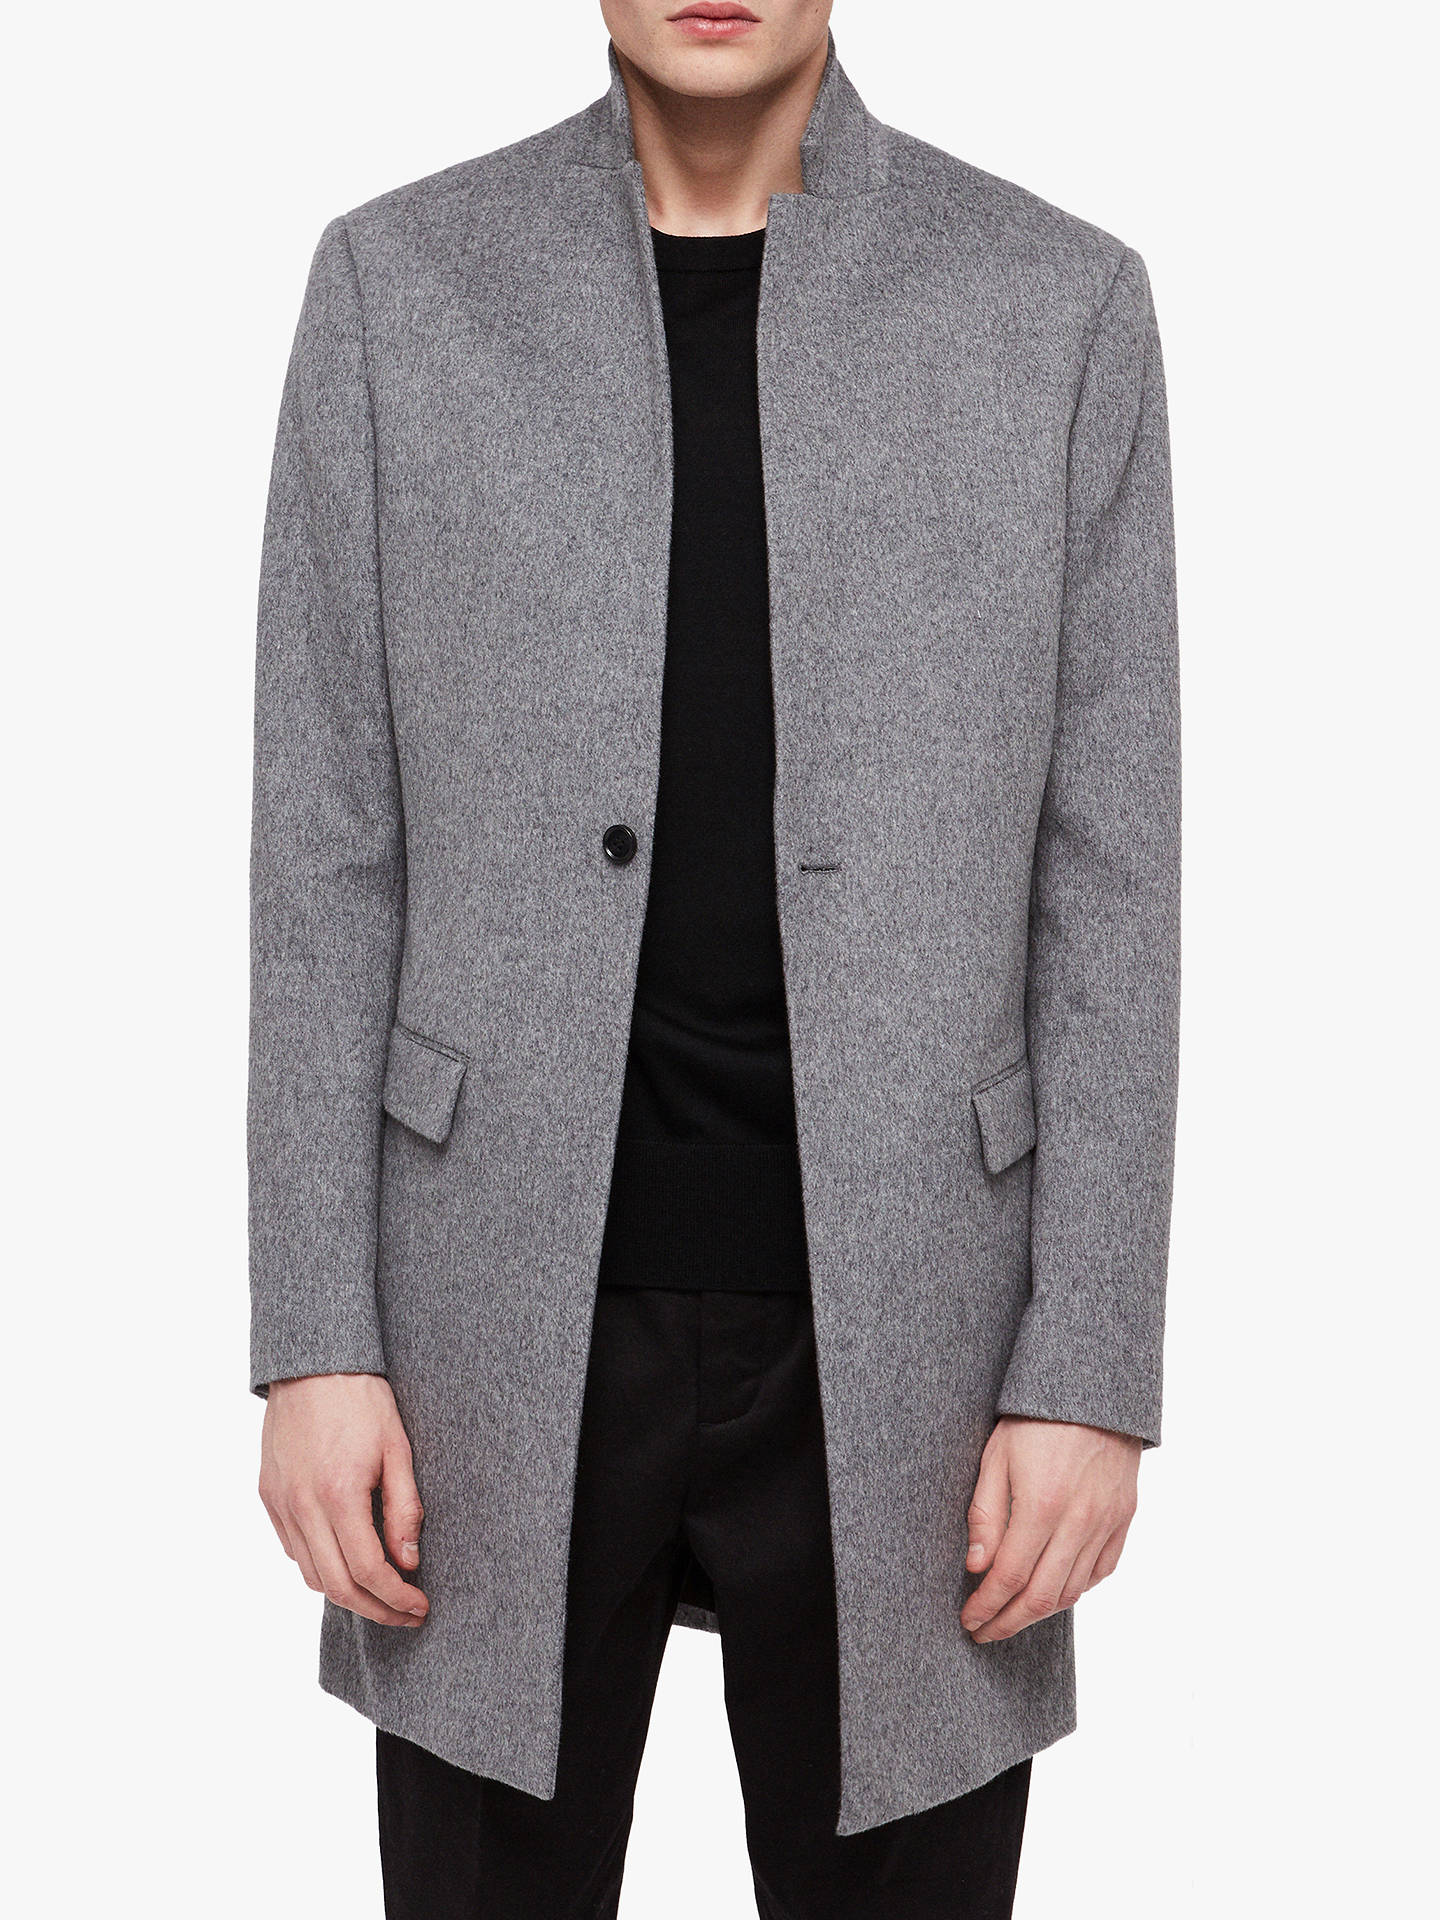 AllSaints Bodell Wool Tailored Coat, Light Grey at John Lewis & Partners